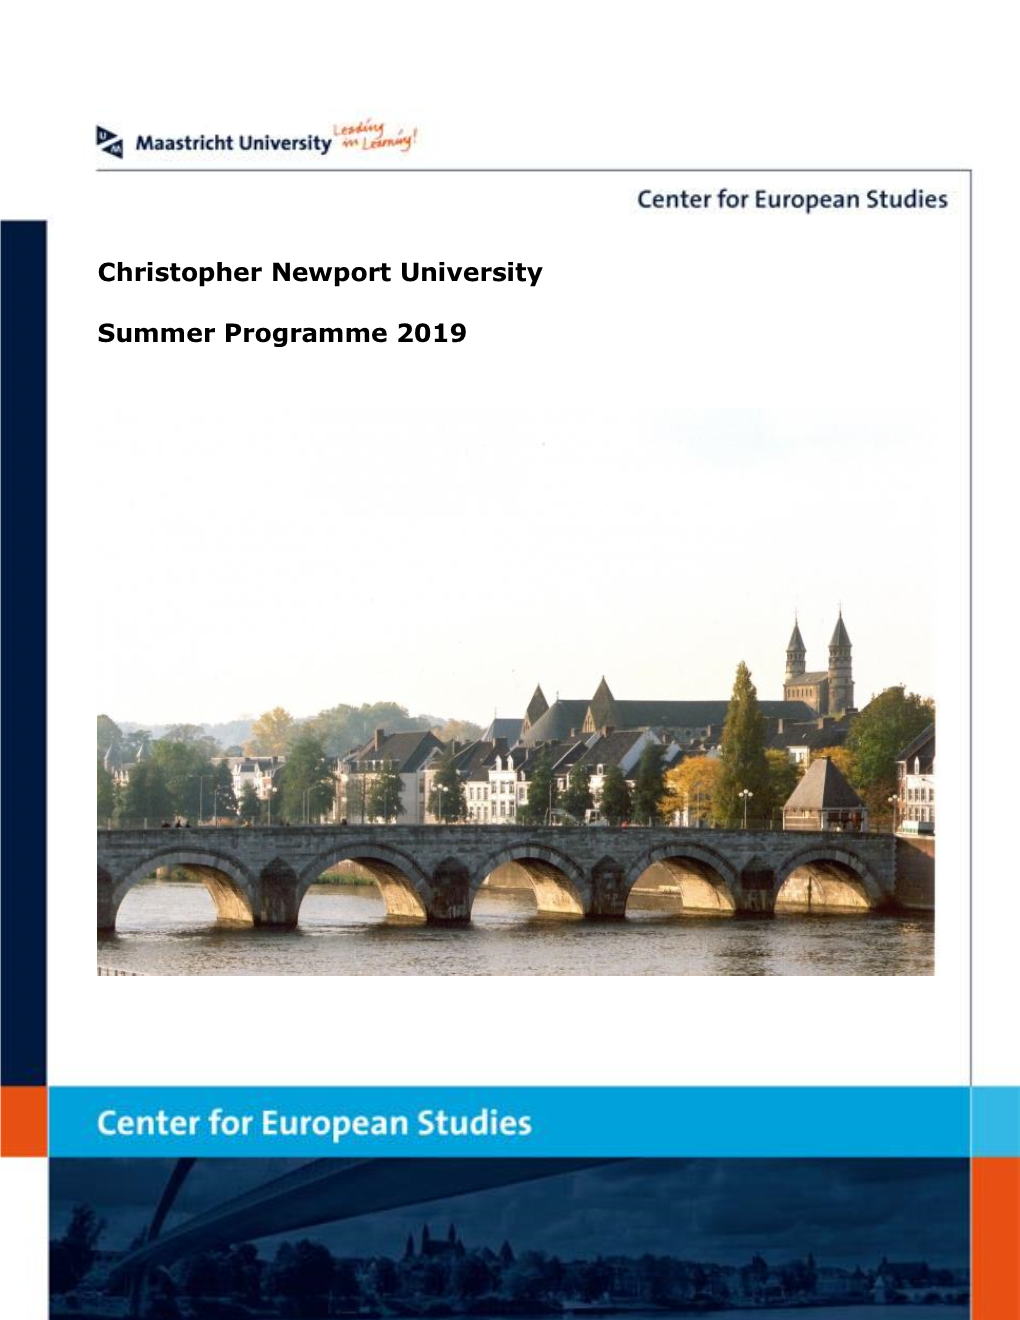 Christopher Newport University Summer Programme 2019